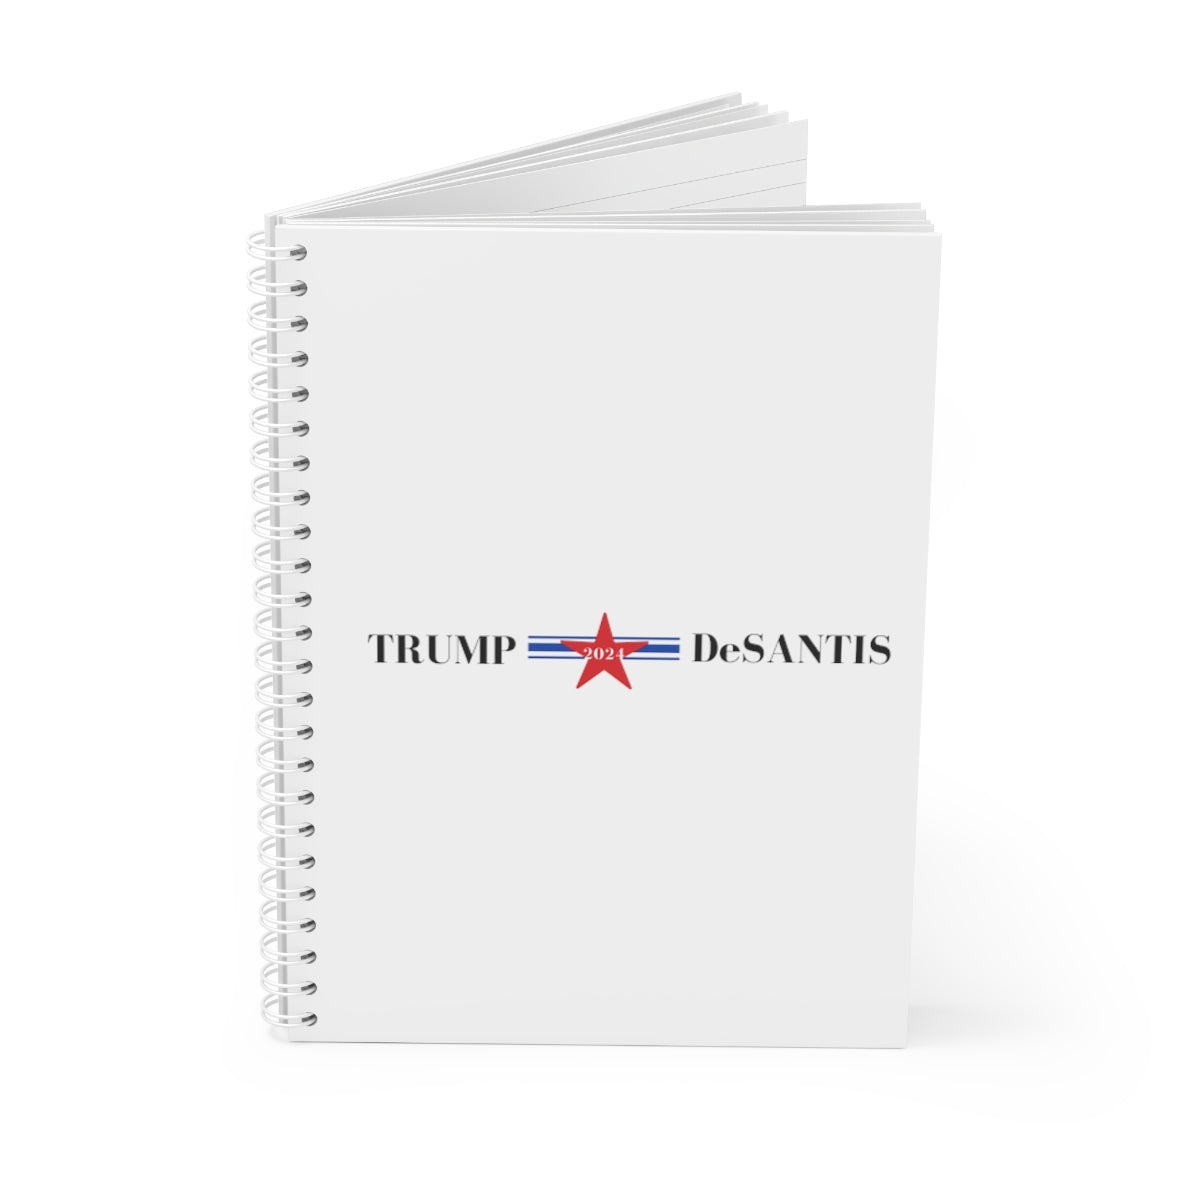 Trump DeSantis Spiral Notebook